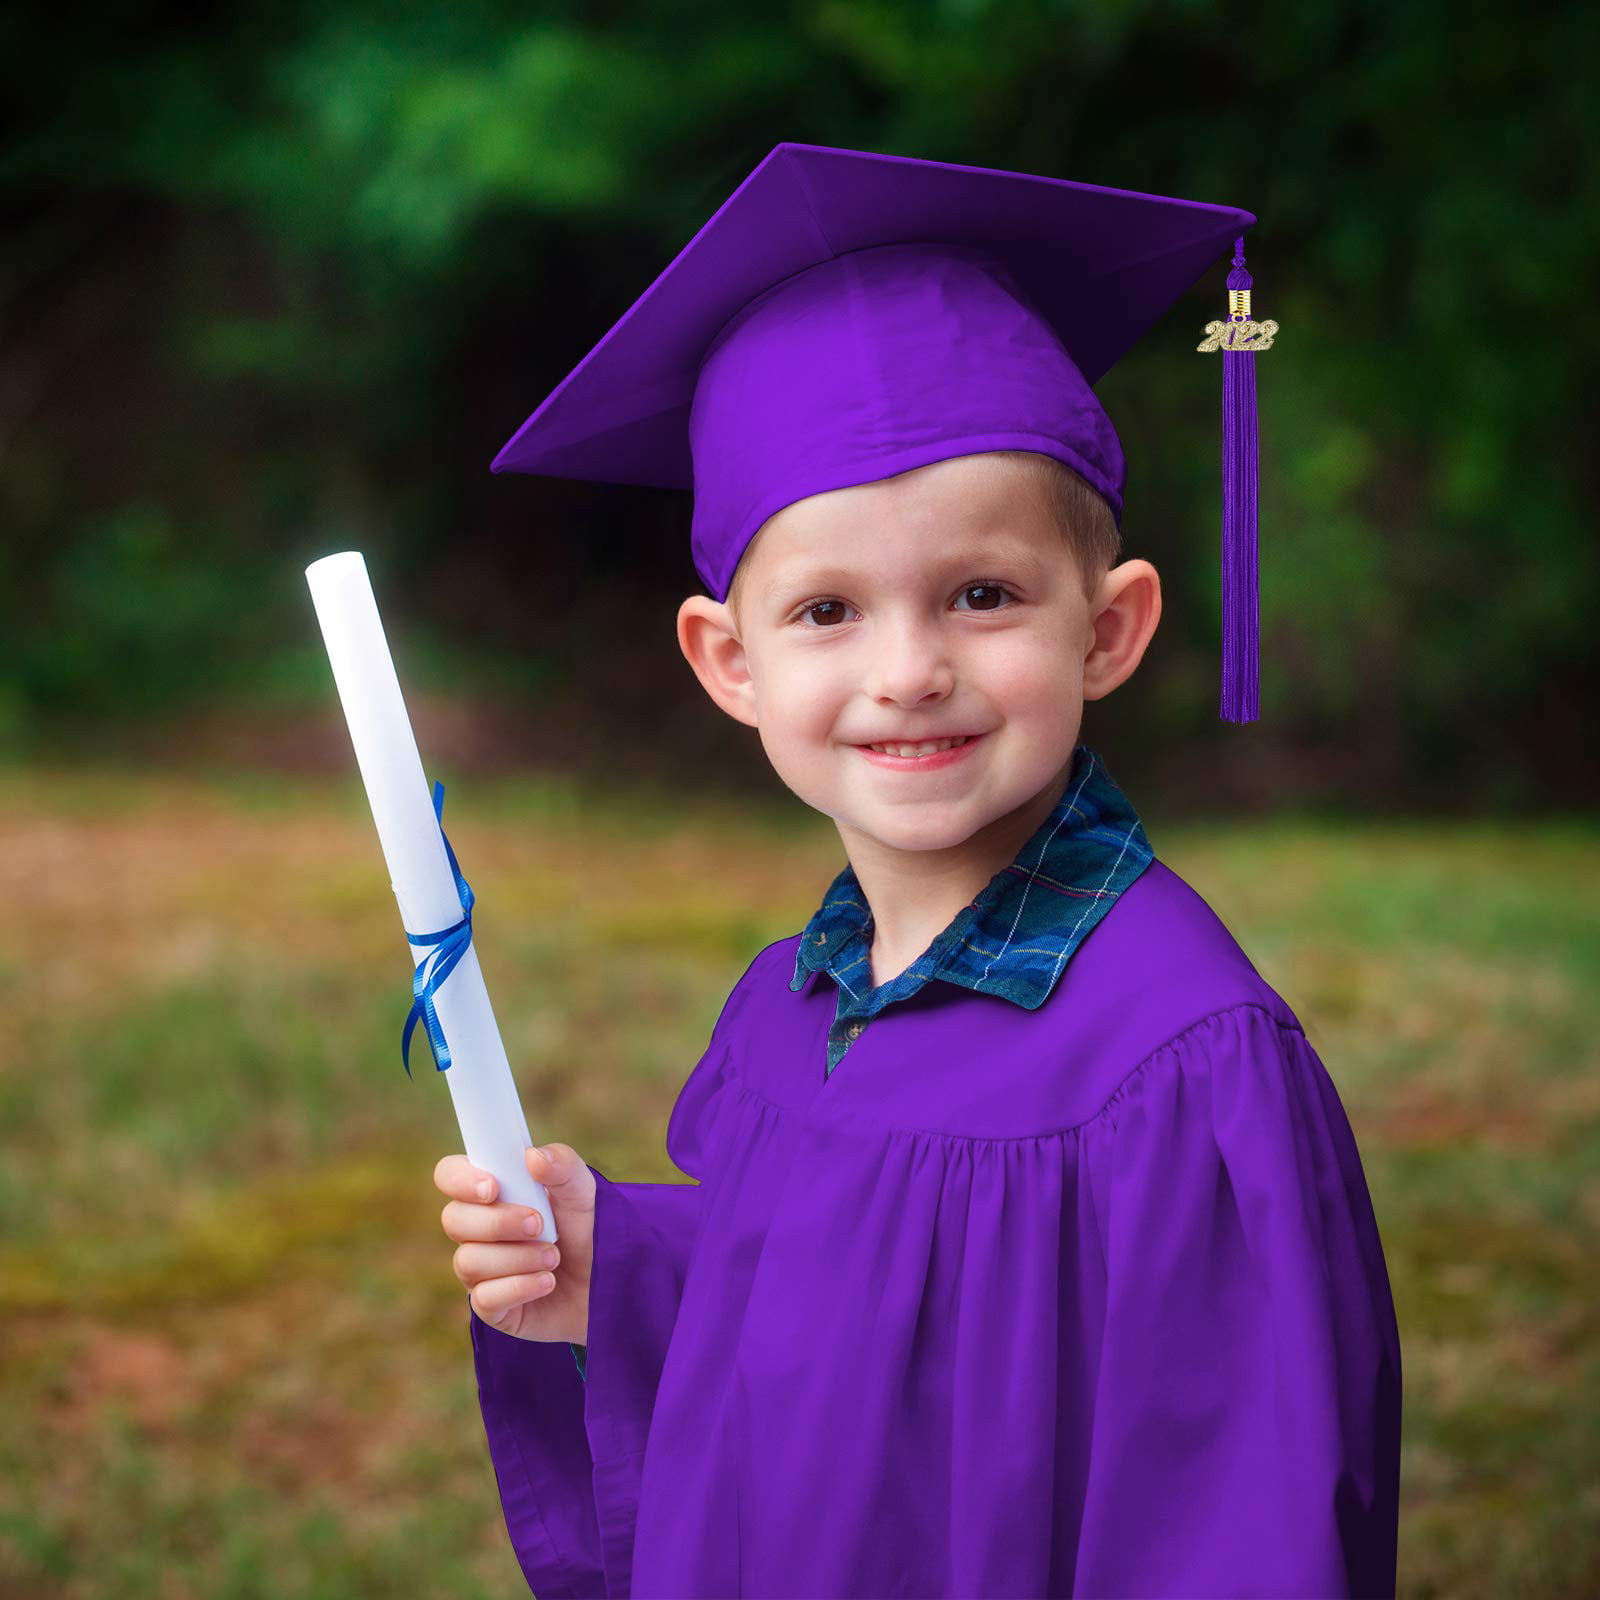 Premium Vector | Children in graduation gowns jumped happy graduation day